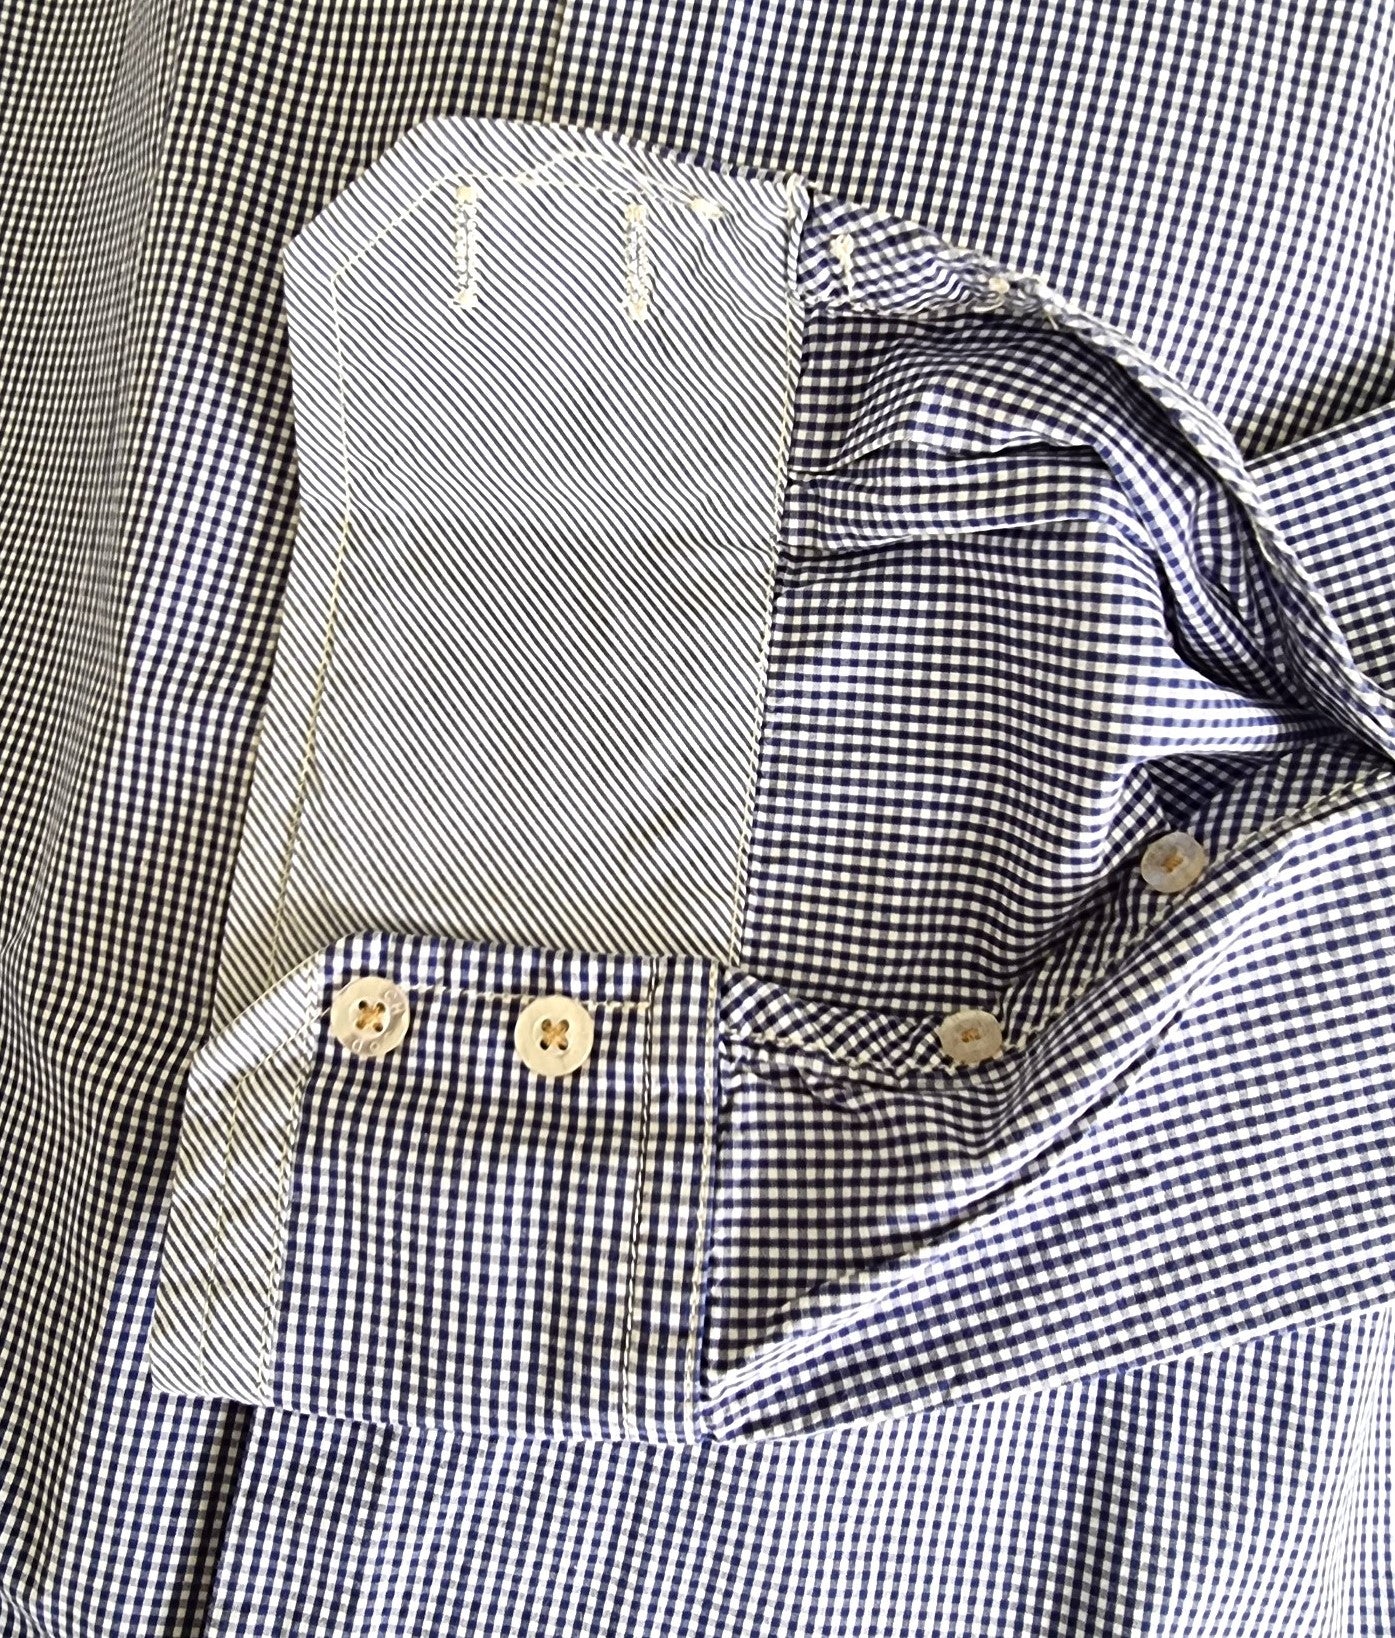 Scotch & Soda Blue & White Oxford Collar Cotton Check Mens Shirt Size M Timeless Fashions